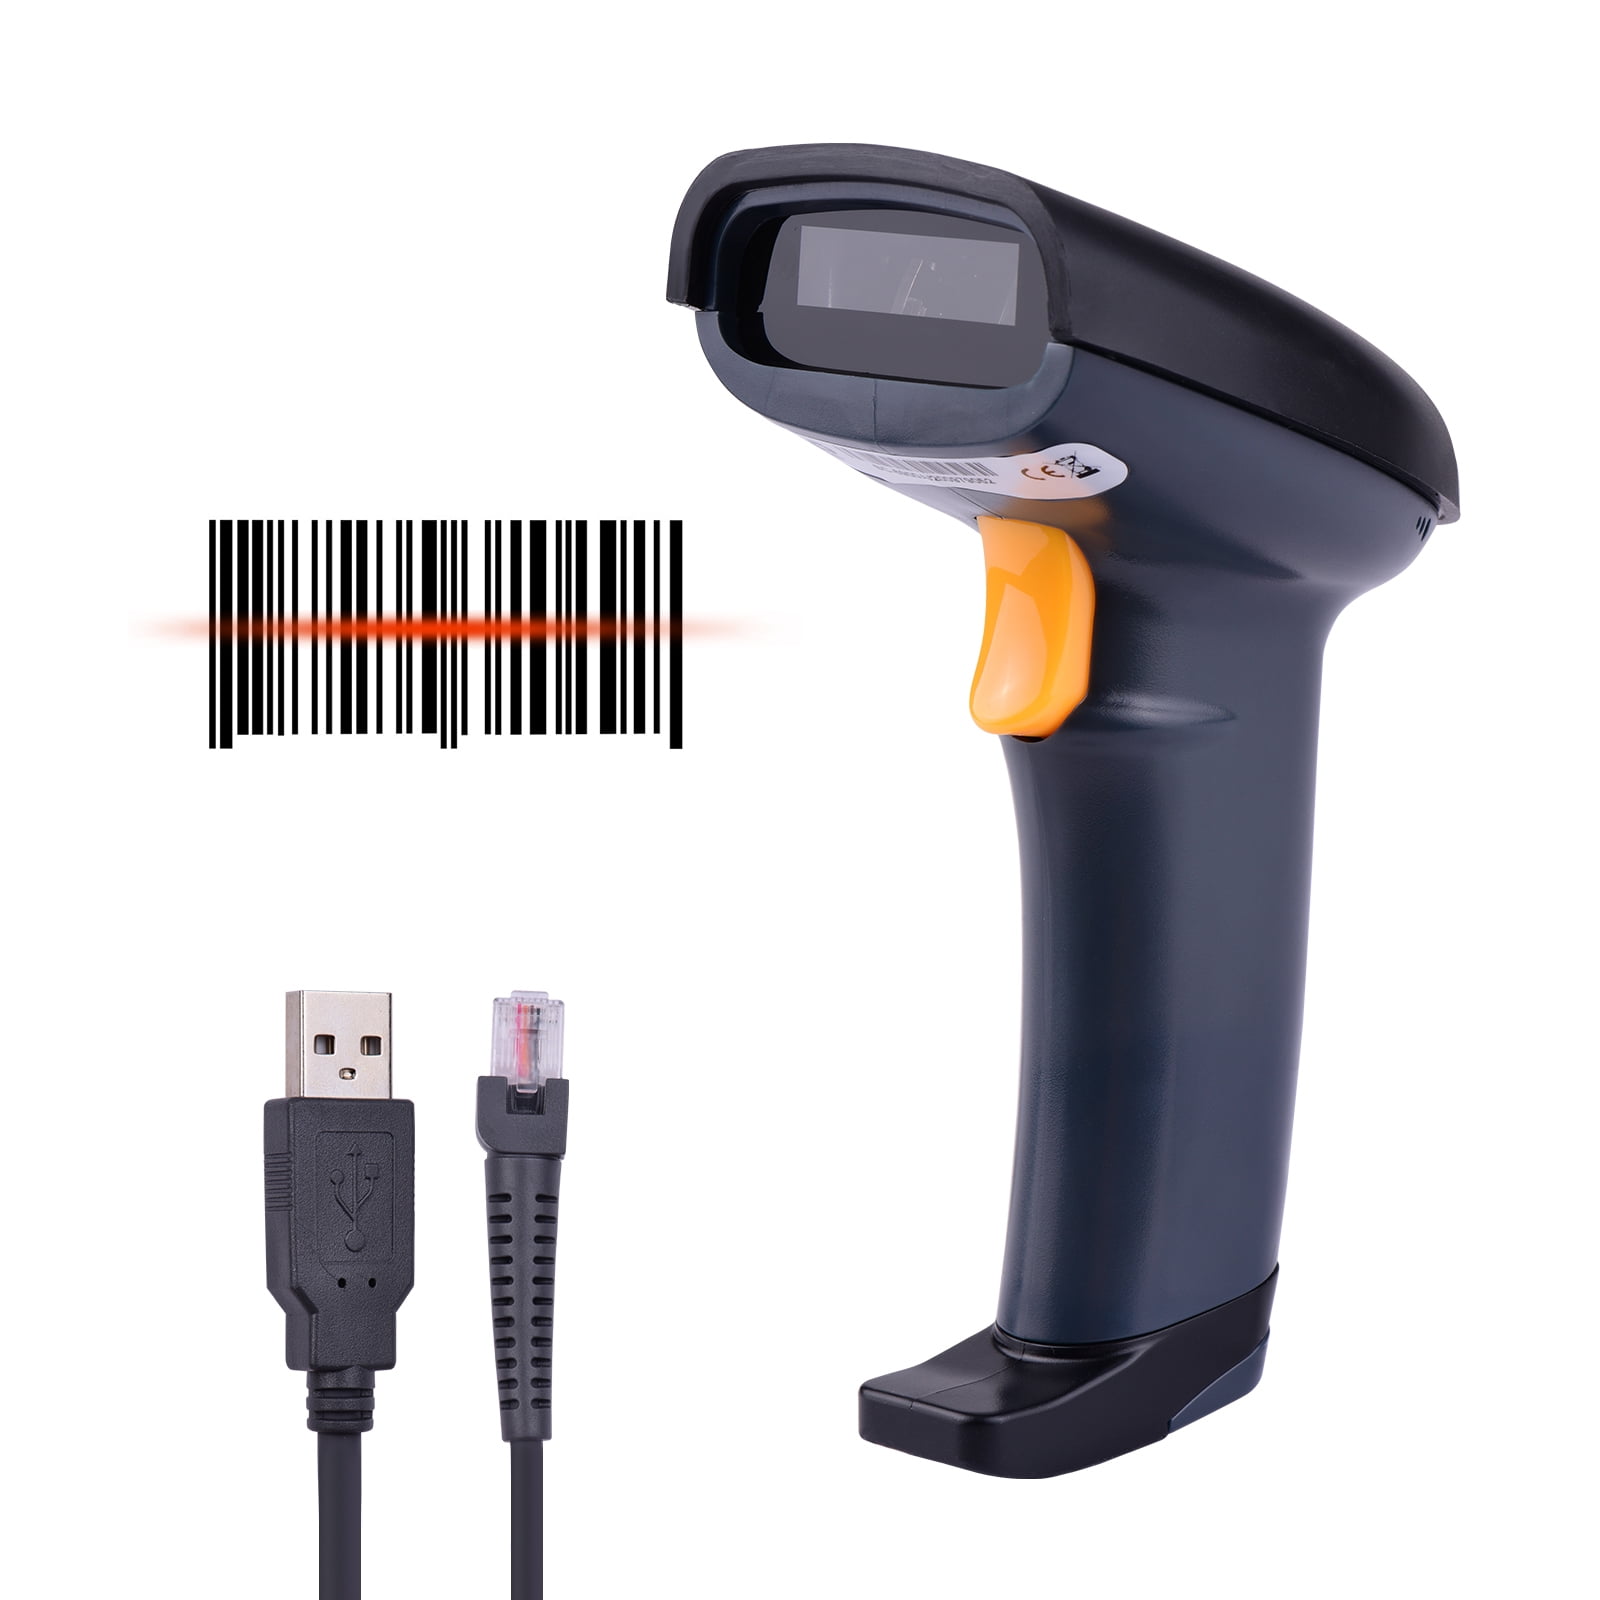 TaoTronics USB Barcode Scanner Handheld Wired Bar Code 1D Laser Scanner with Adjustable Stand Renewed 